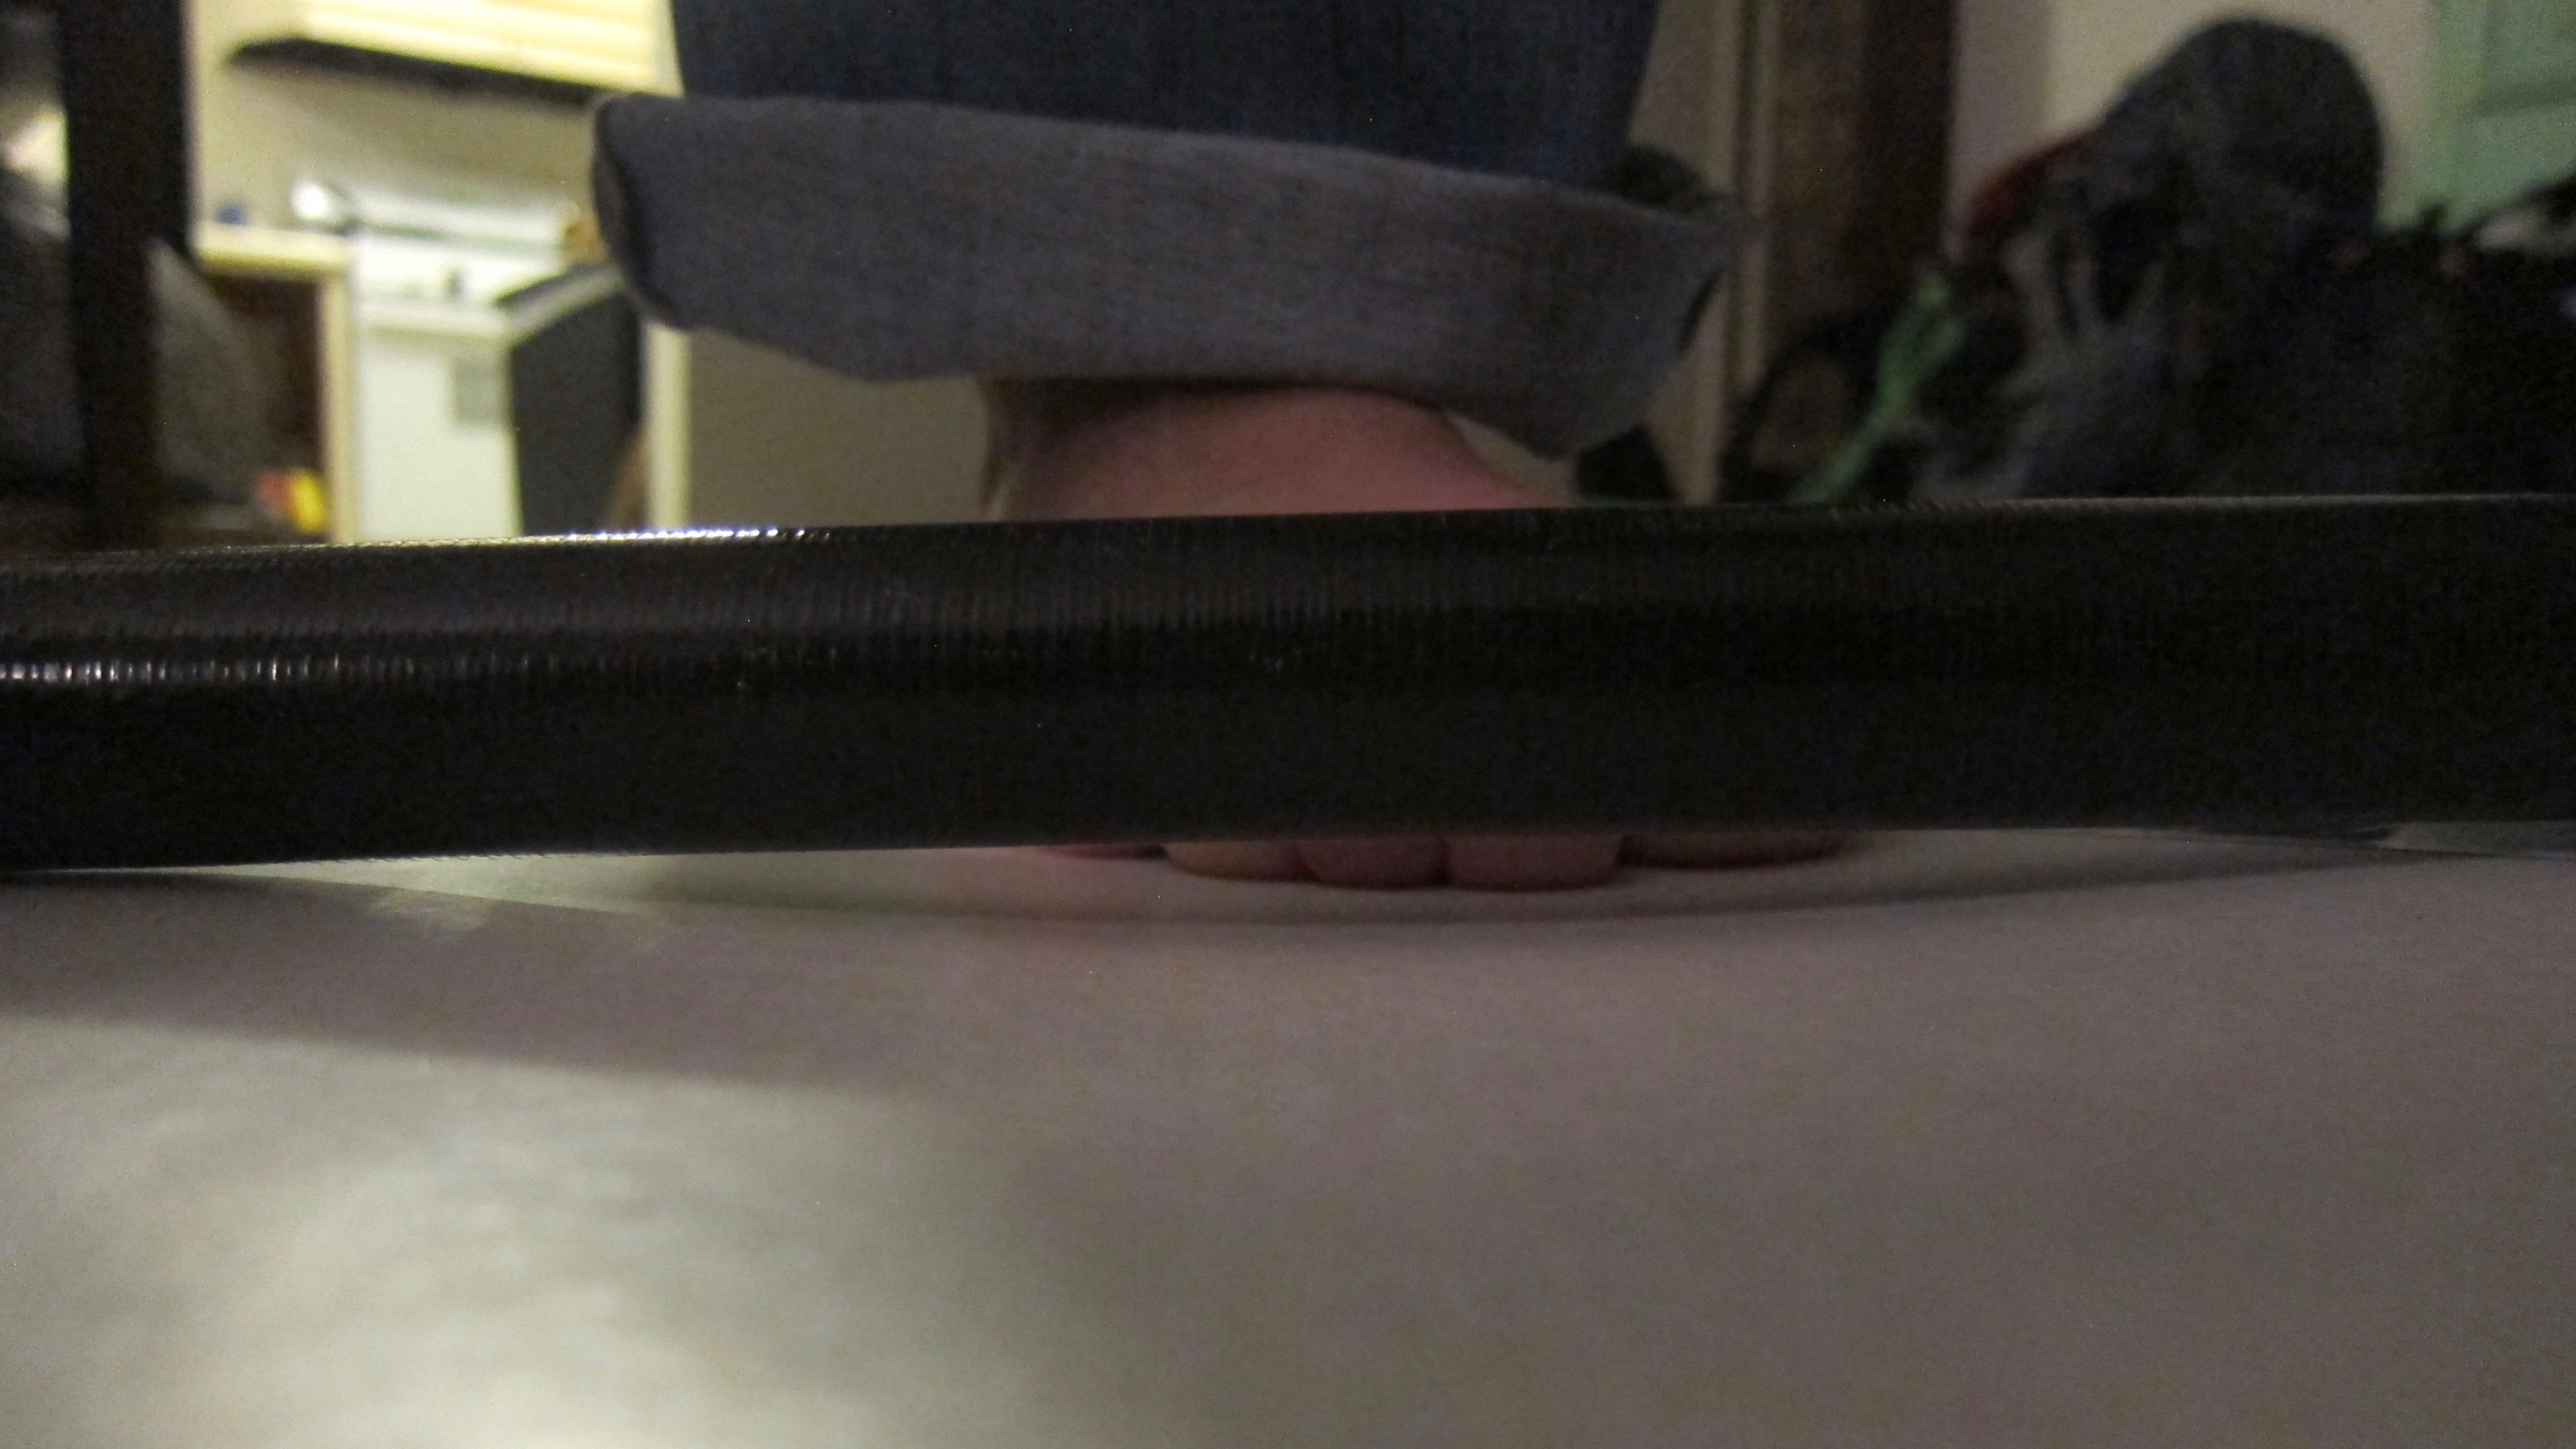 BounceSUP 10'6" Multi-Purpose (hollow) flex